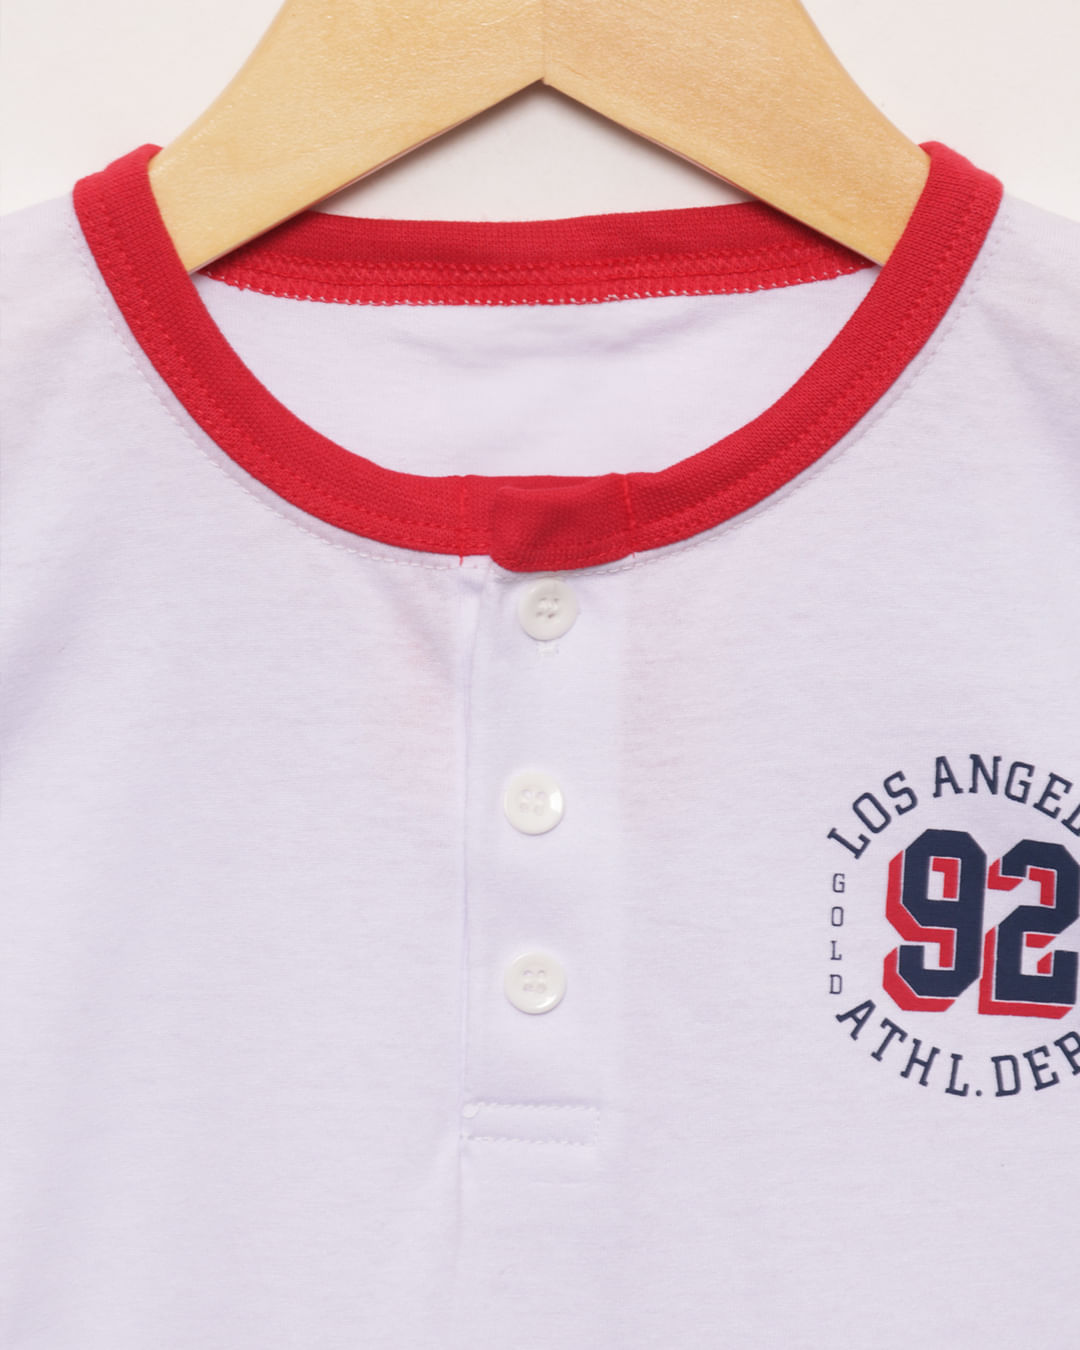 Camiseta-Bebe-Manga-Curta-Estampa-Los-Angeles-Branca